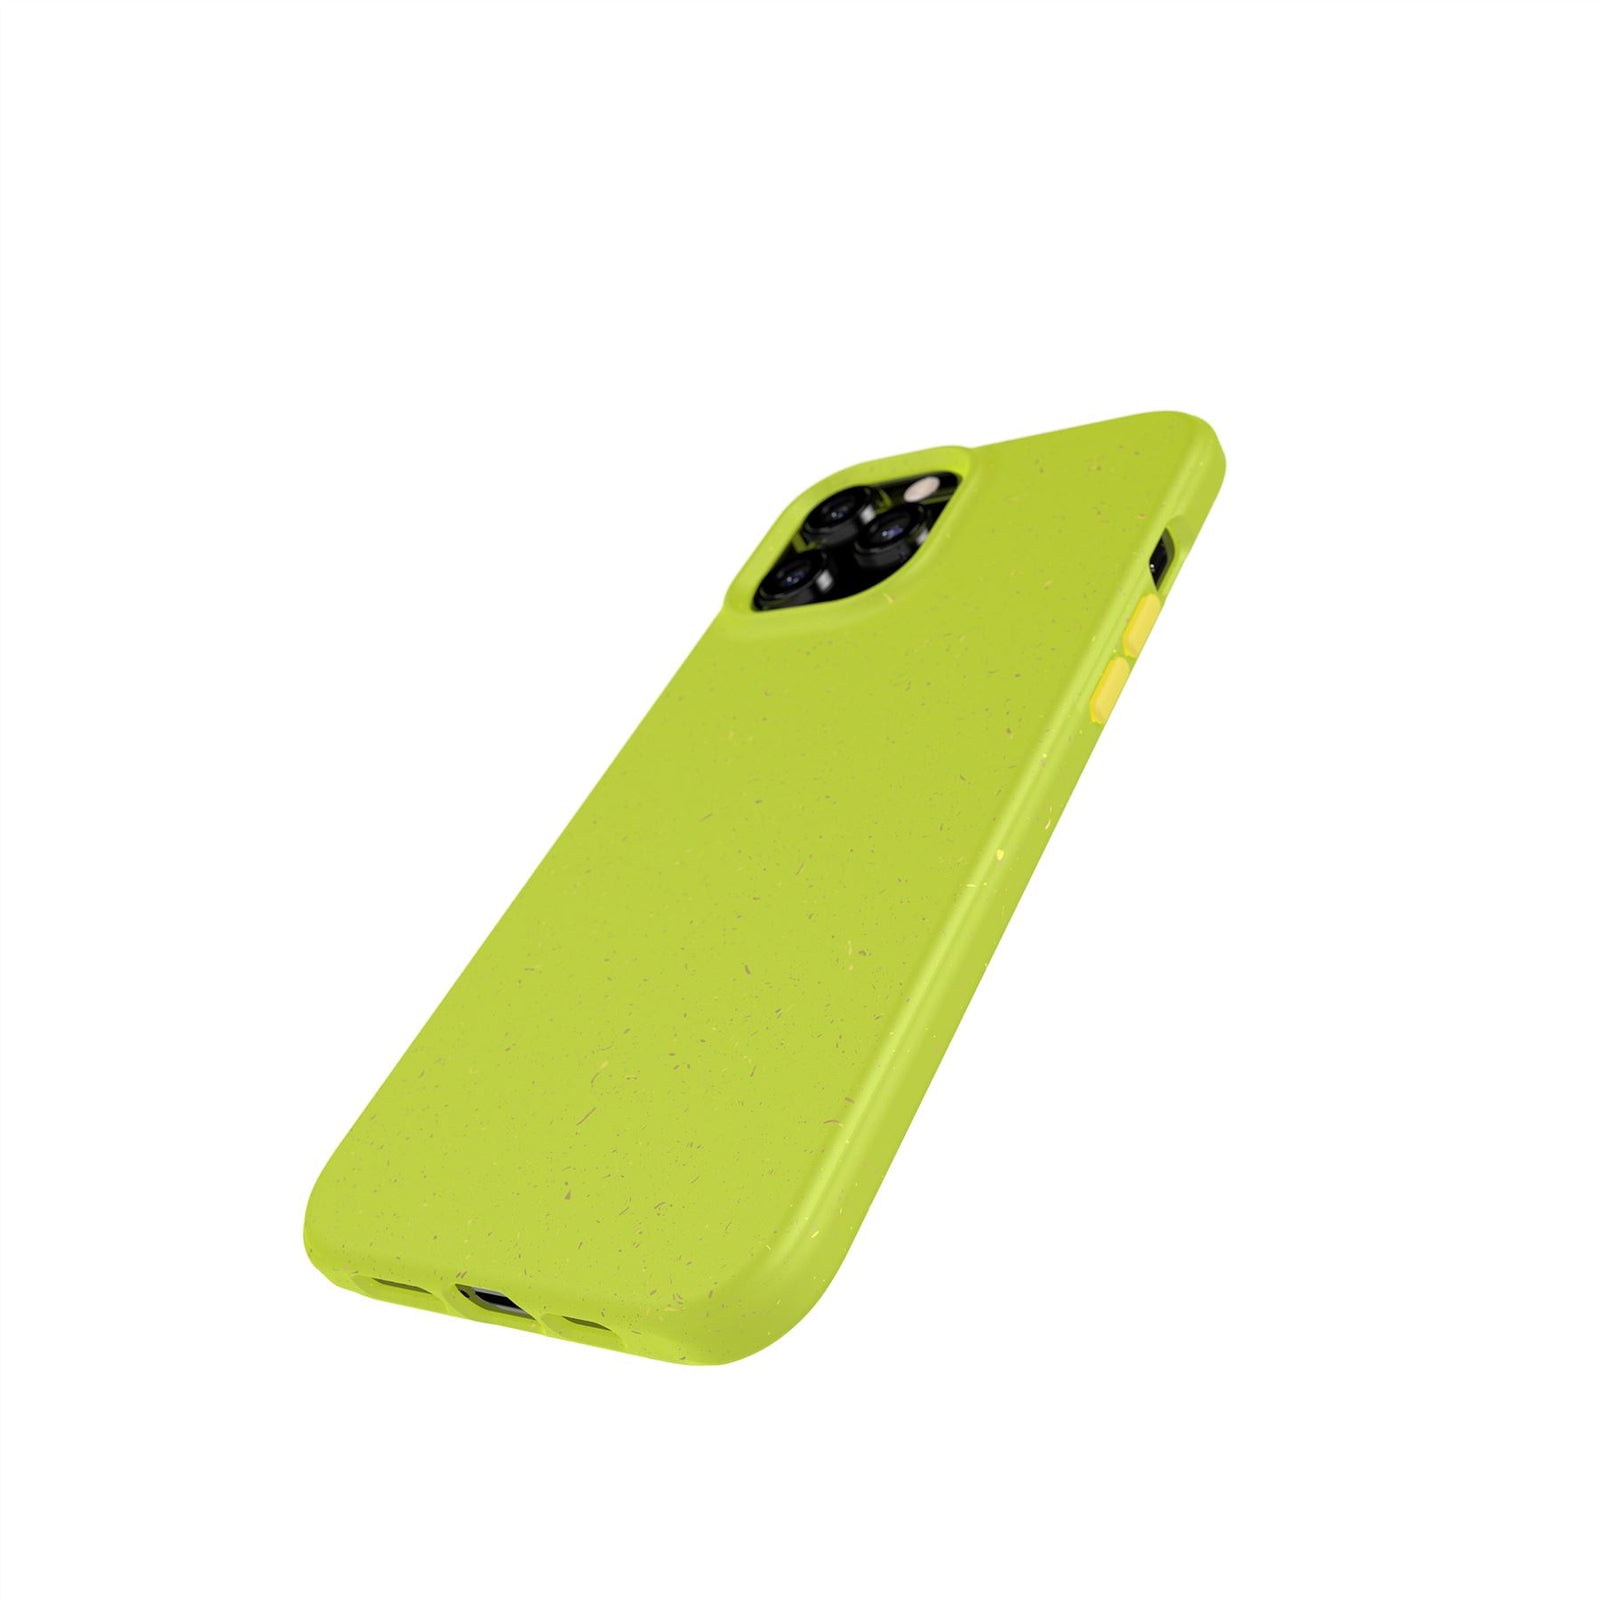 Eco Slim - Apple iPhone 12 Pro Max Case - Moss Green